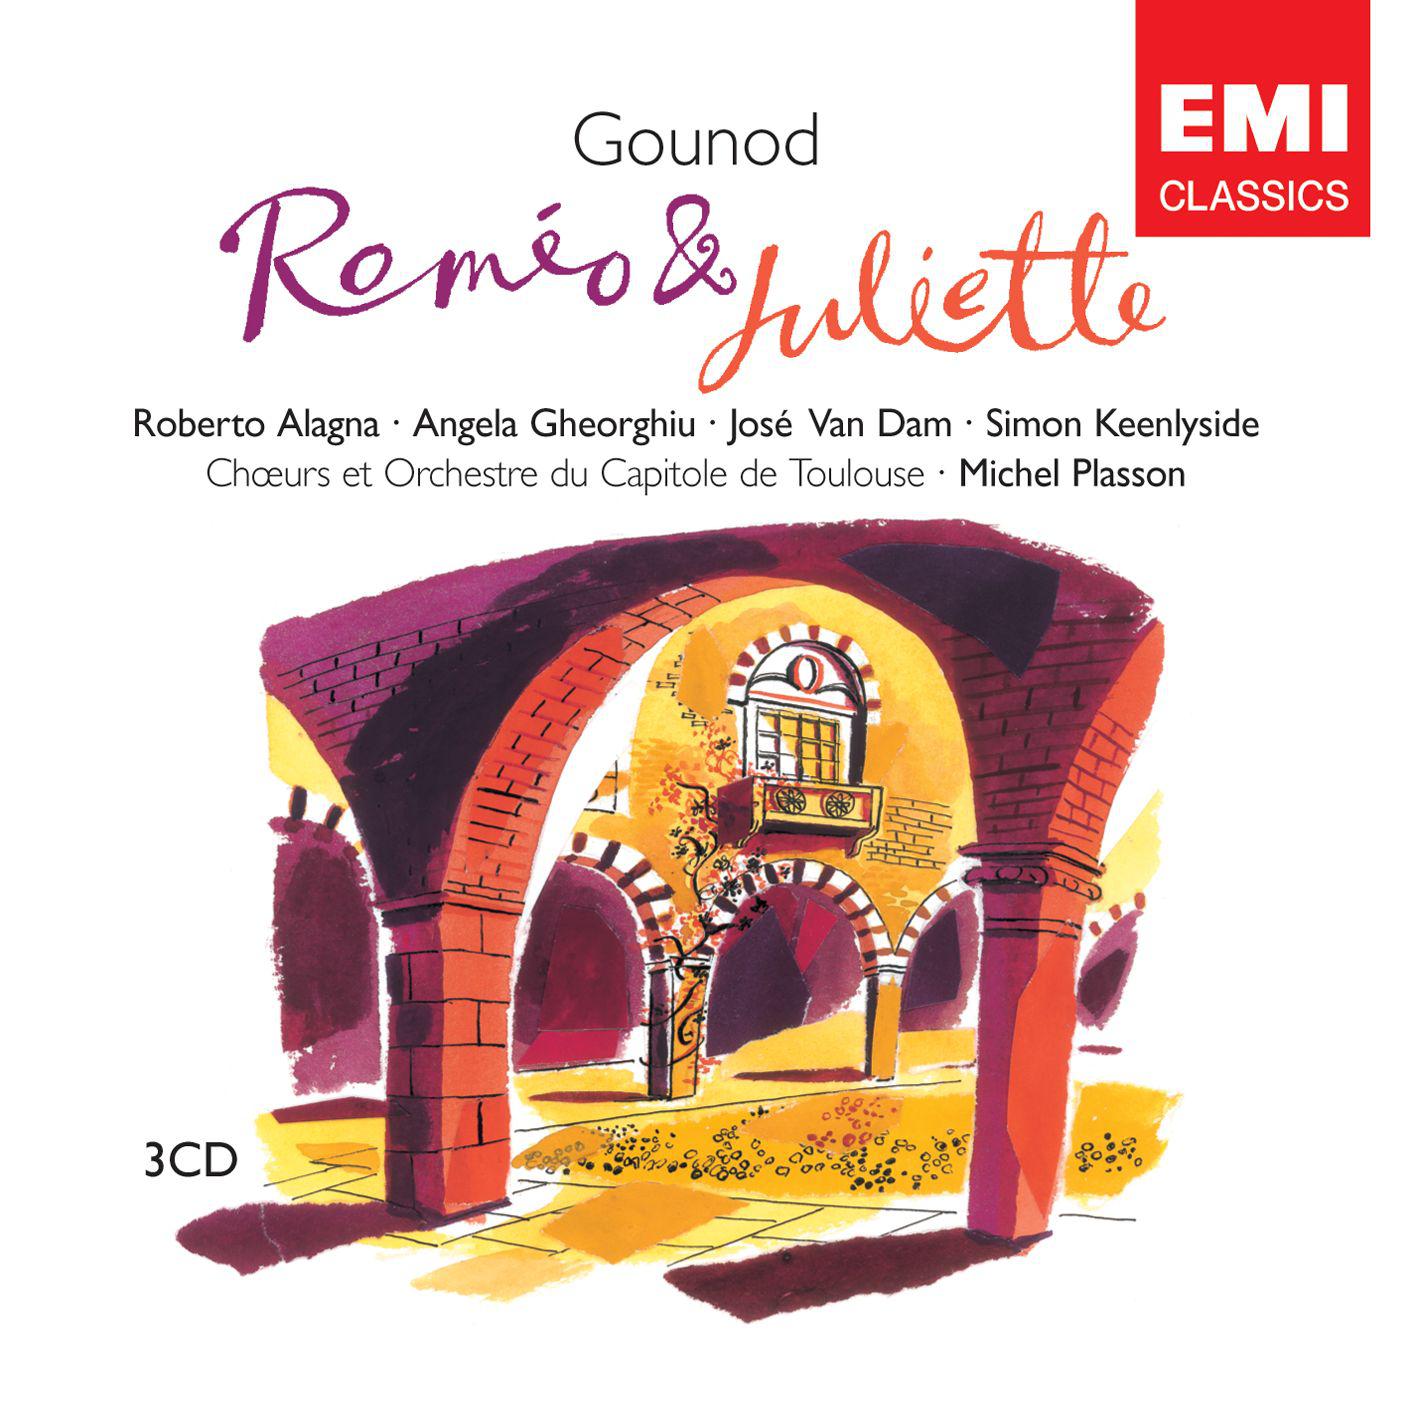 Gounod: Rome o et Juliette